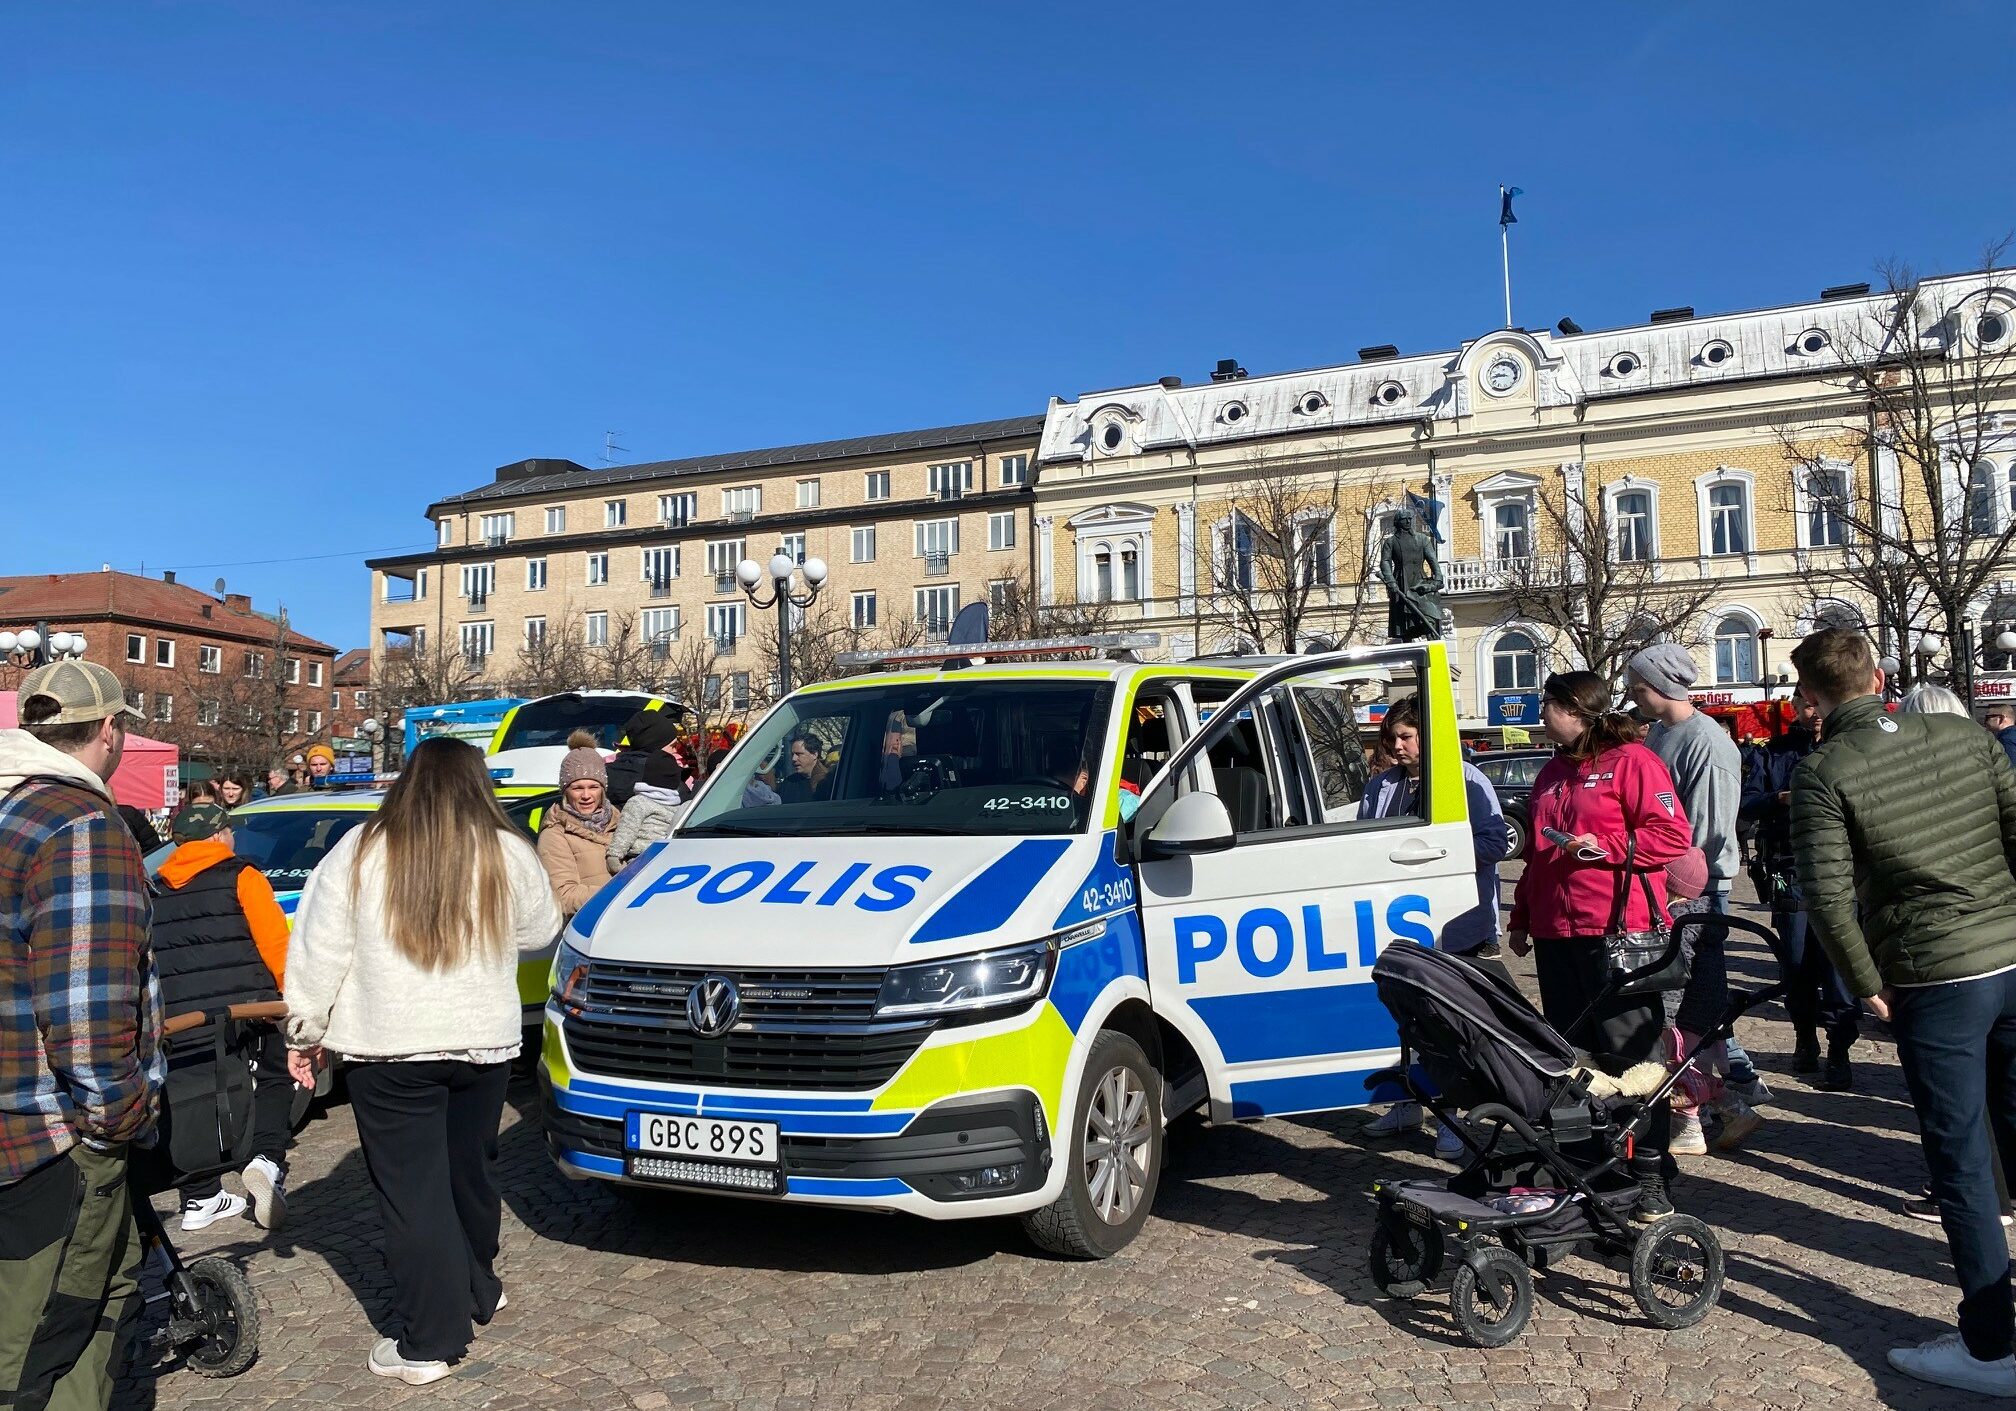 Polis1 på torget fotograf Pia Axelsson